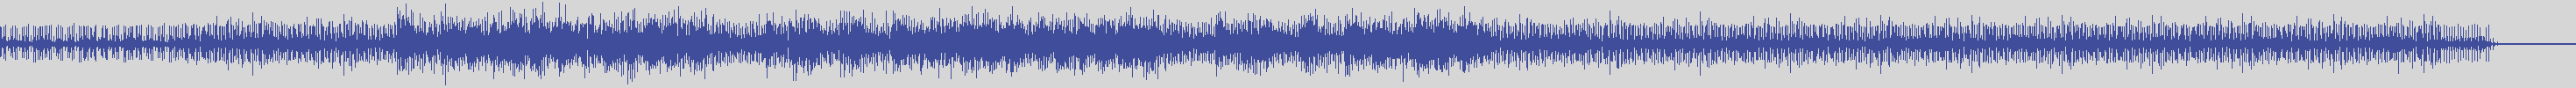 noclouds_chillout [NOC141] Underpiano - Piano D'ansia [Original Mix] audio wave form